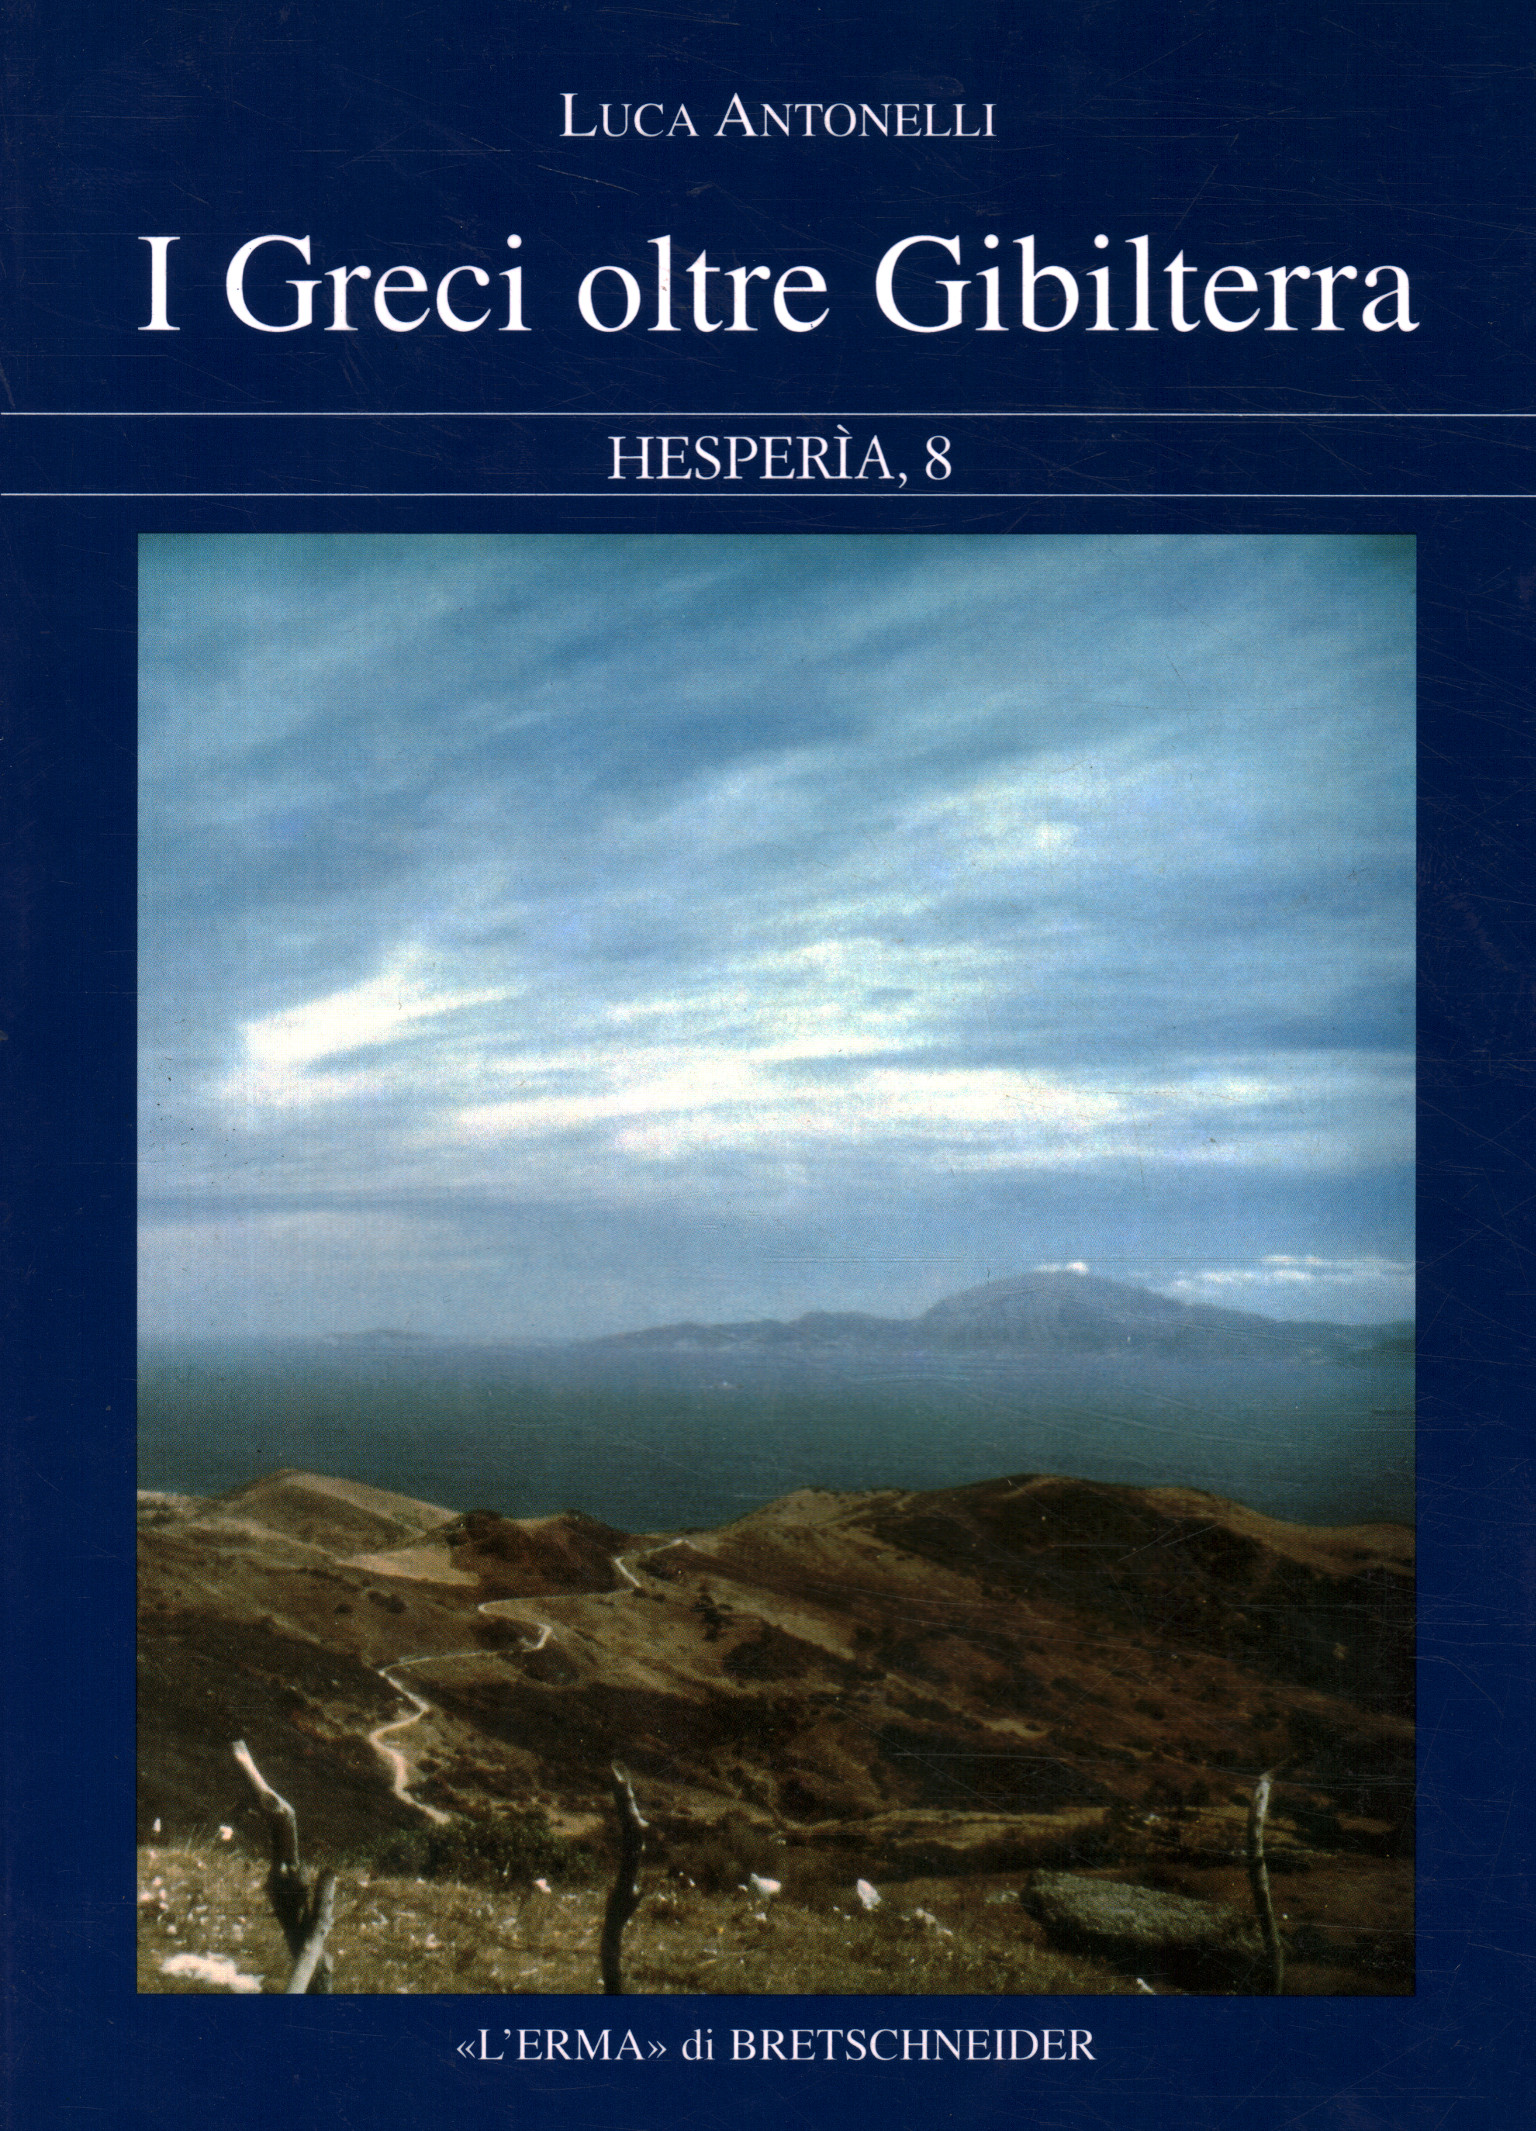 The Greeks beyond Gibraltar: representations